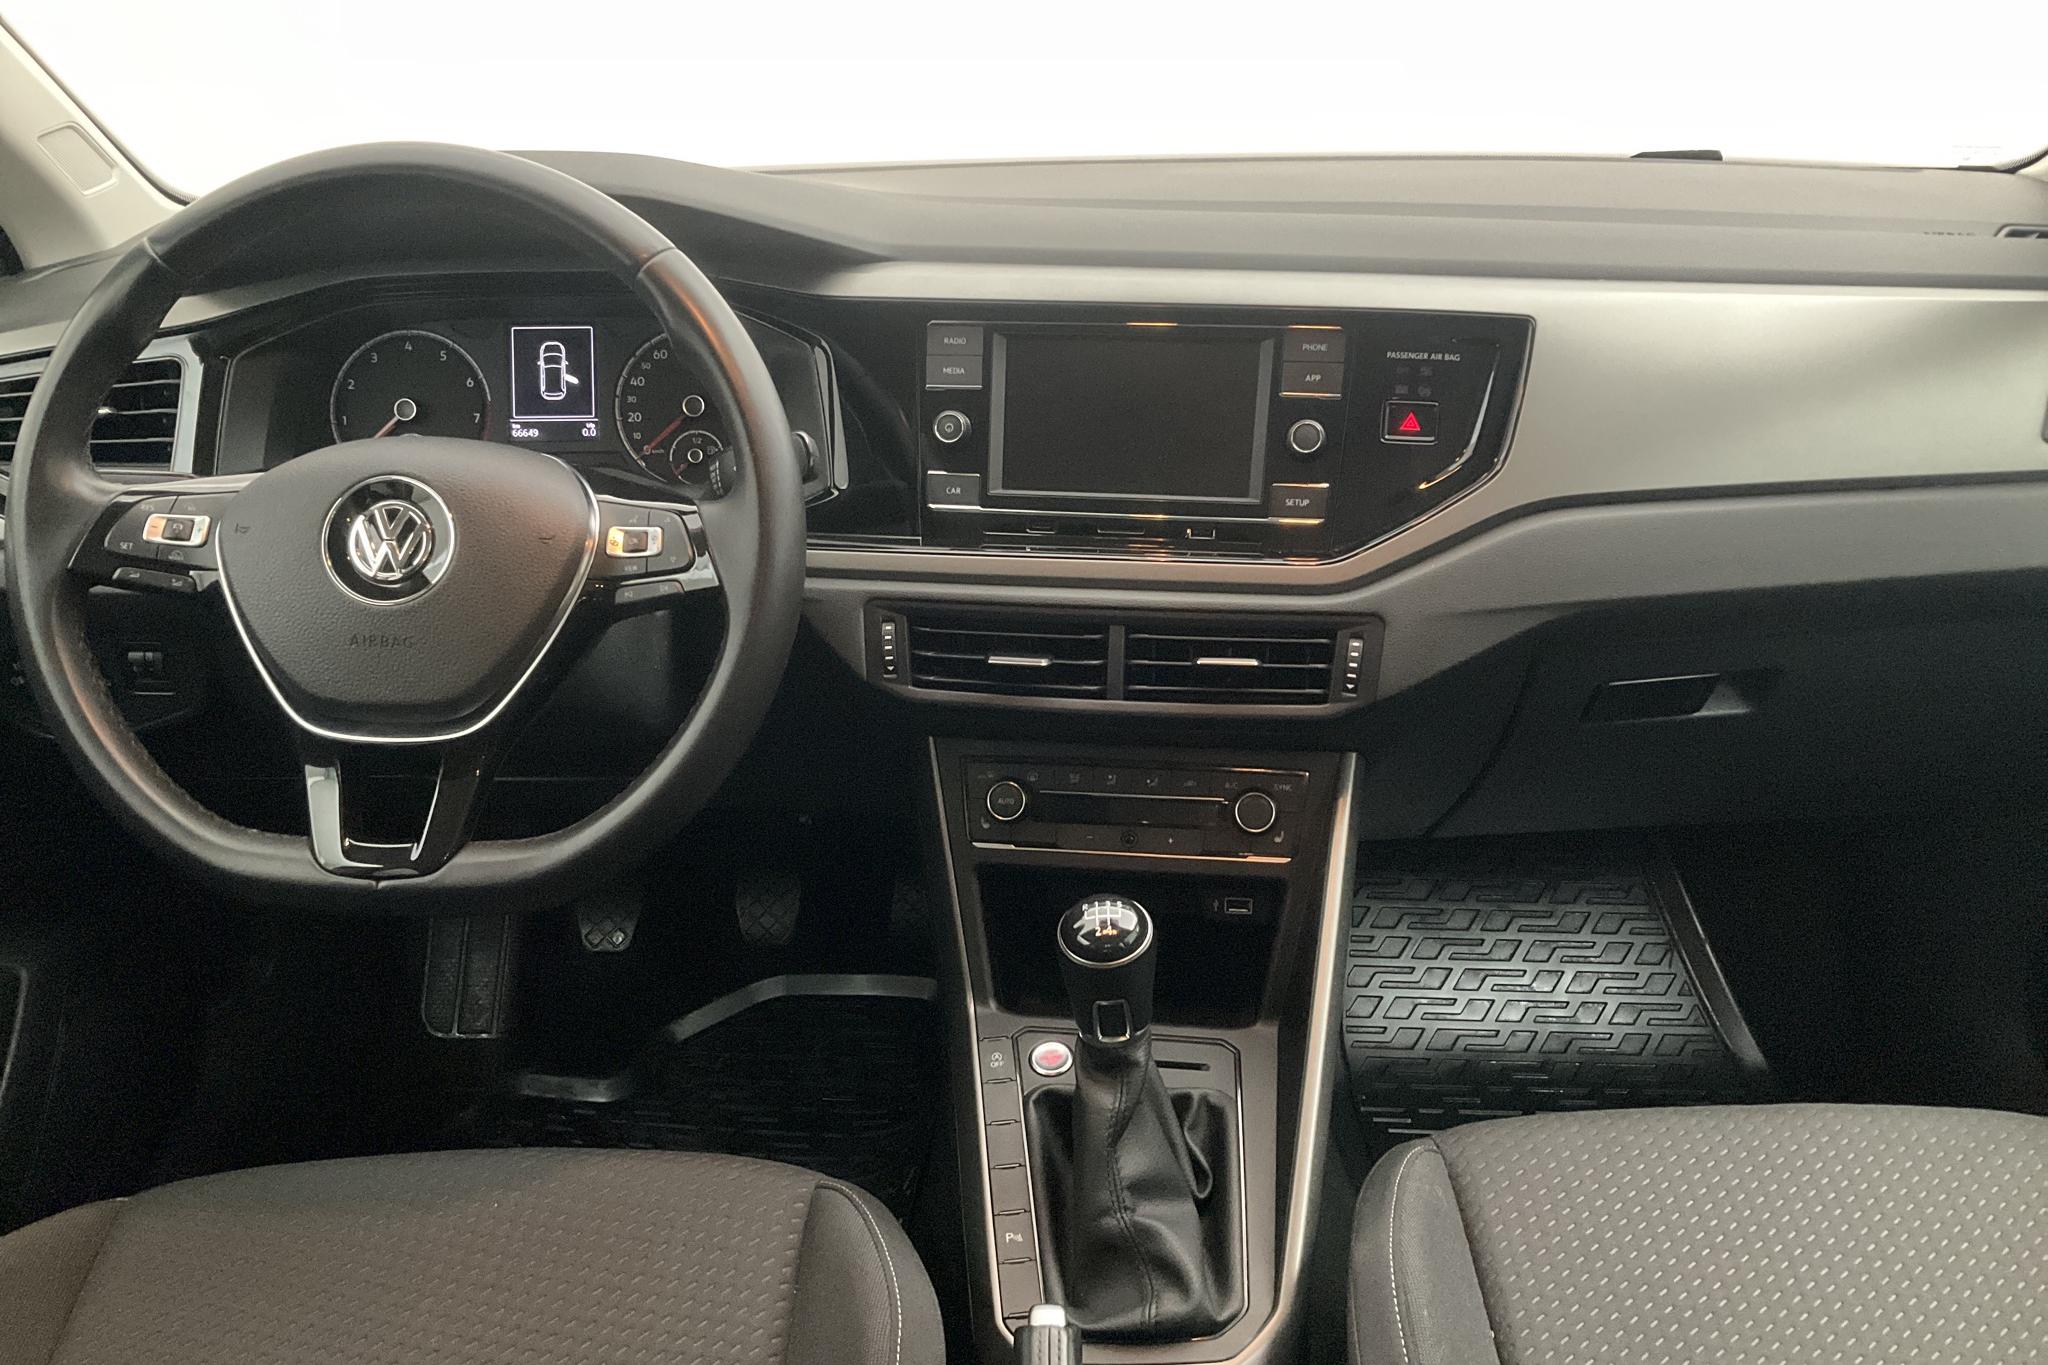 VW Polo 1.0 TSI 5dr (95hk) - 6 665 mil - Manuell - röd - 2018